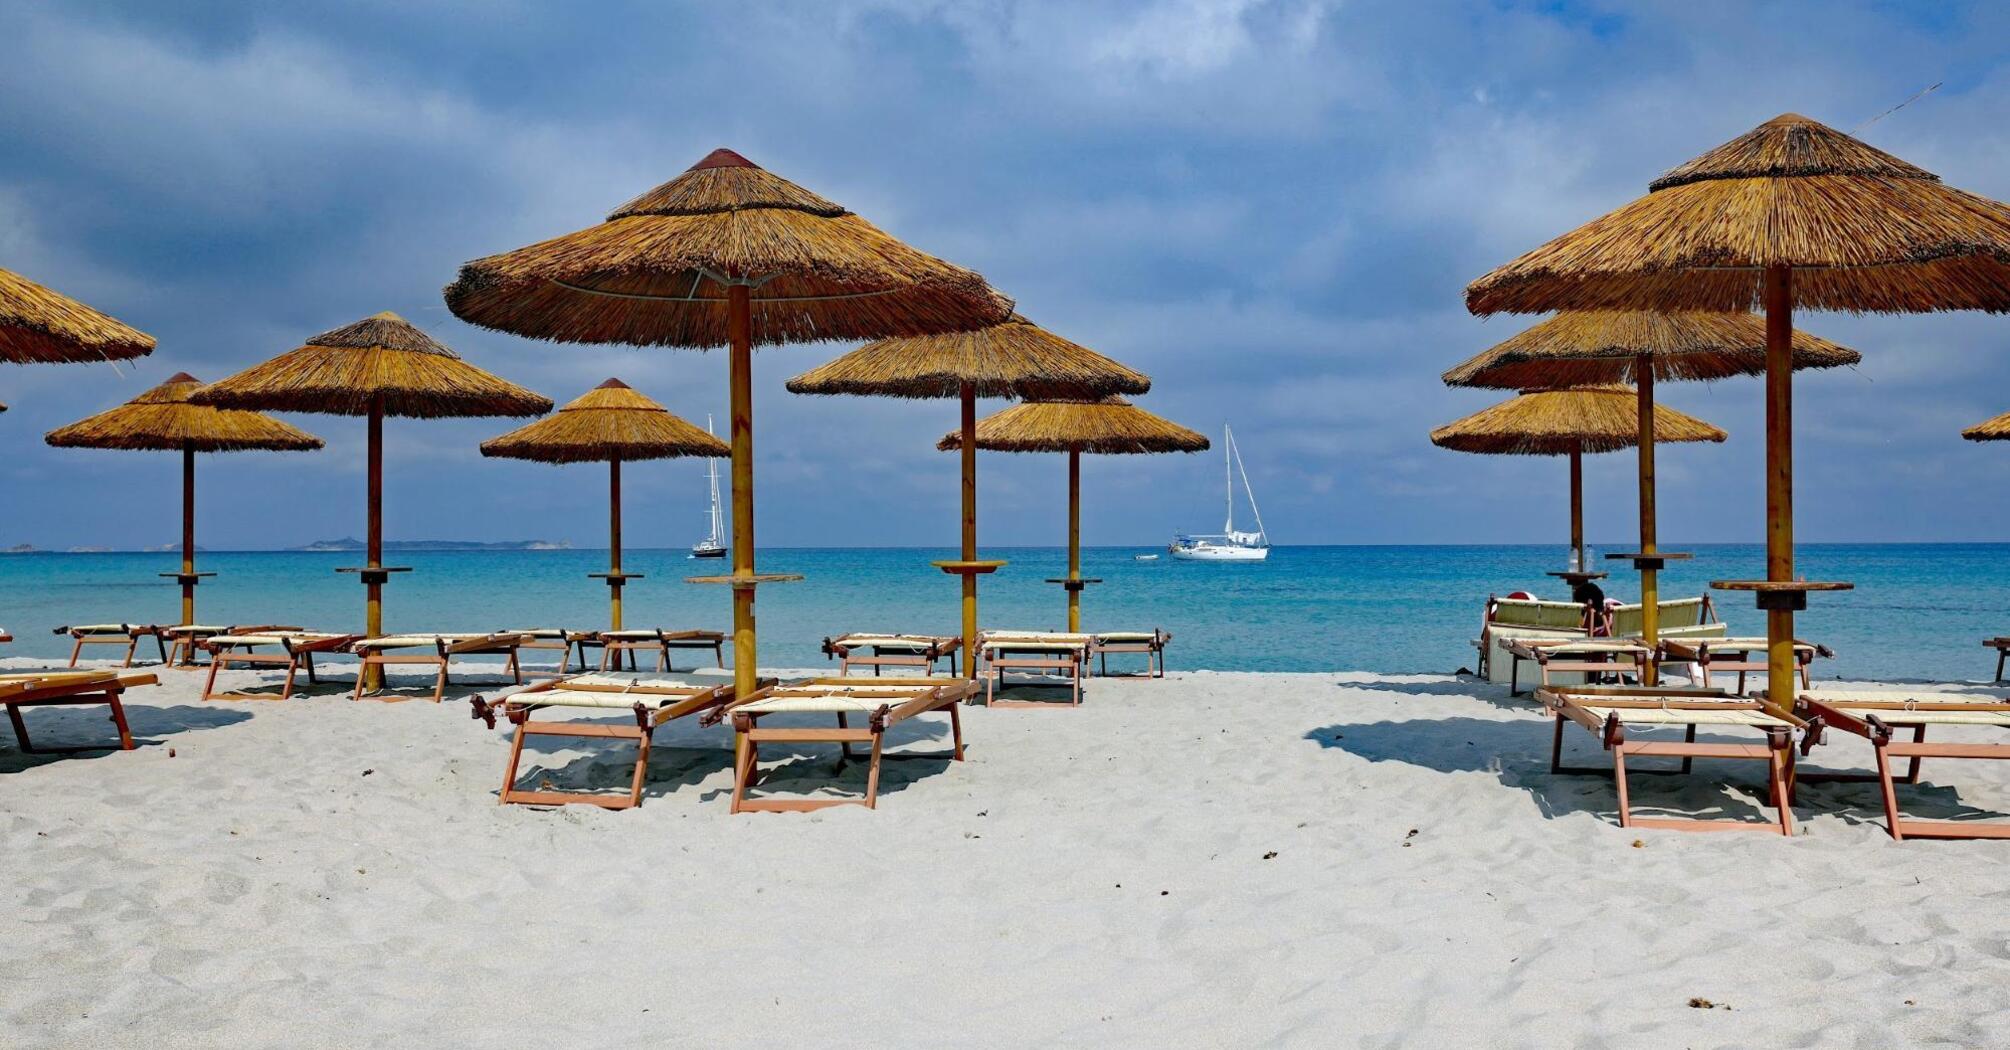 Peaceful beach retreat in picturesque Sardinia